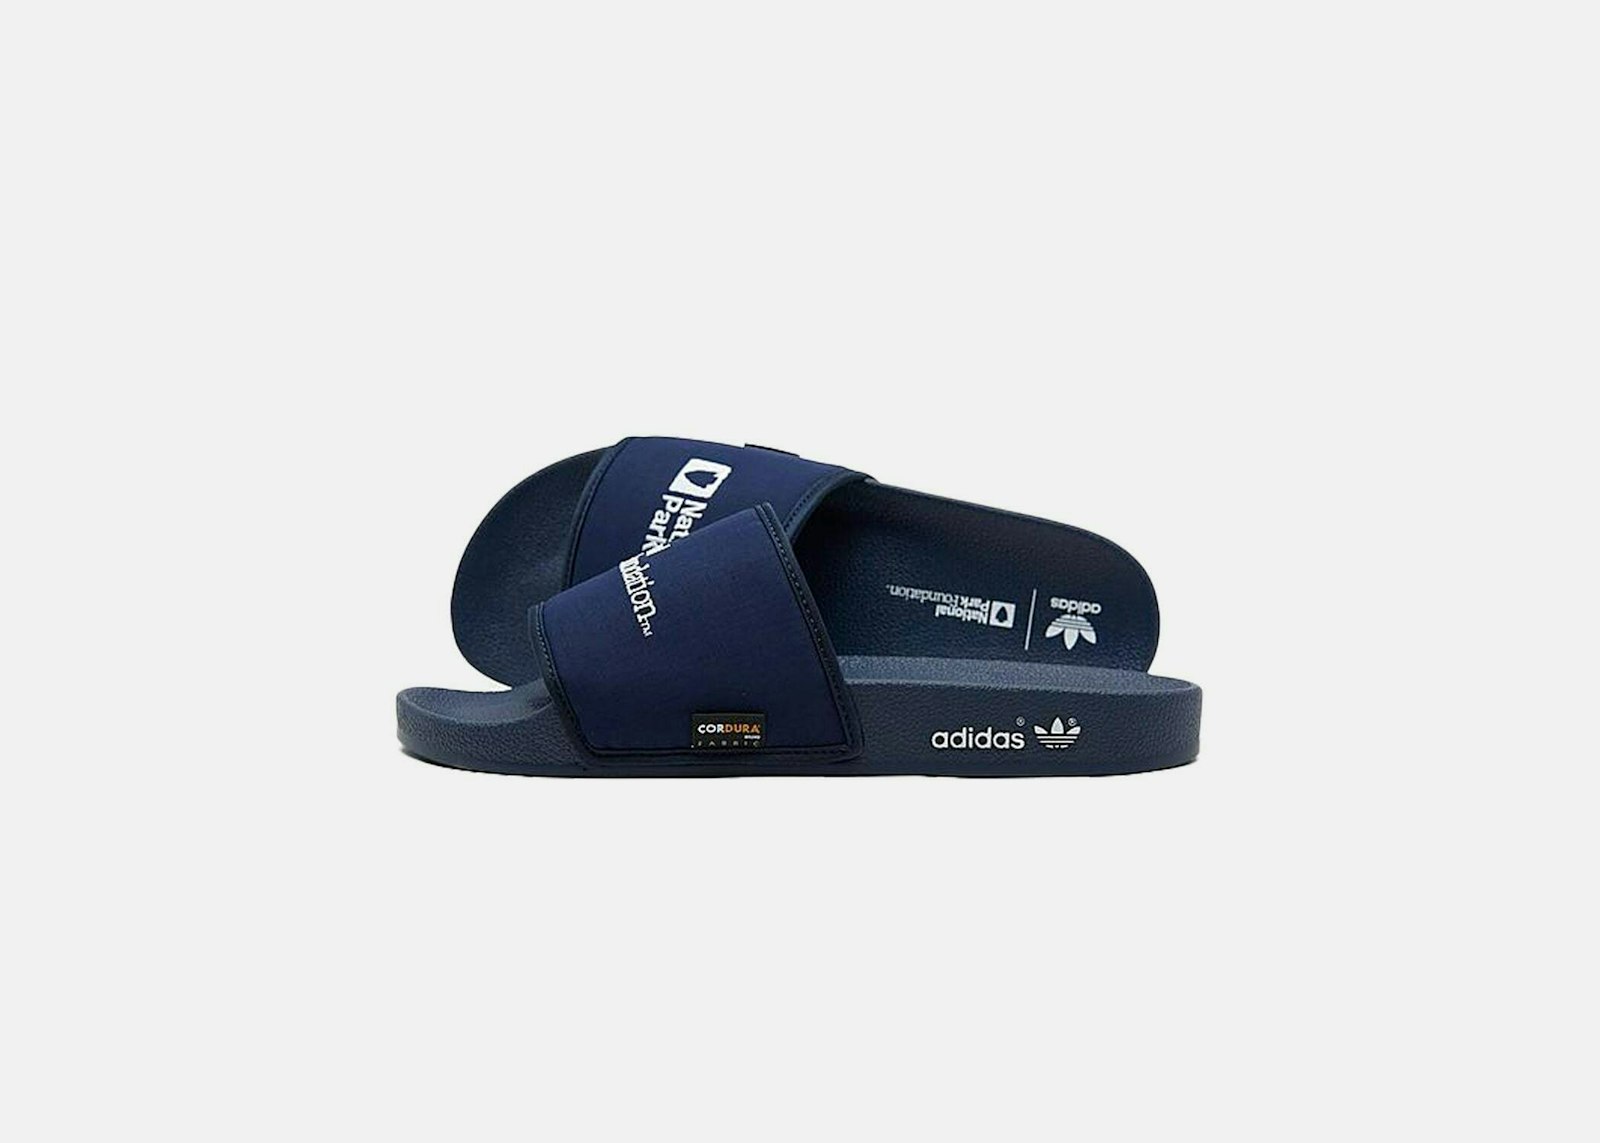 Blue slide sandals with the National Park Foundation logo on them